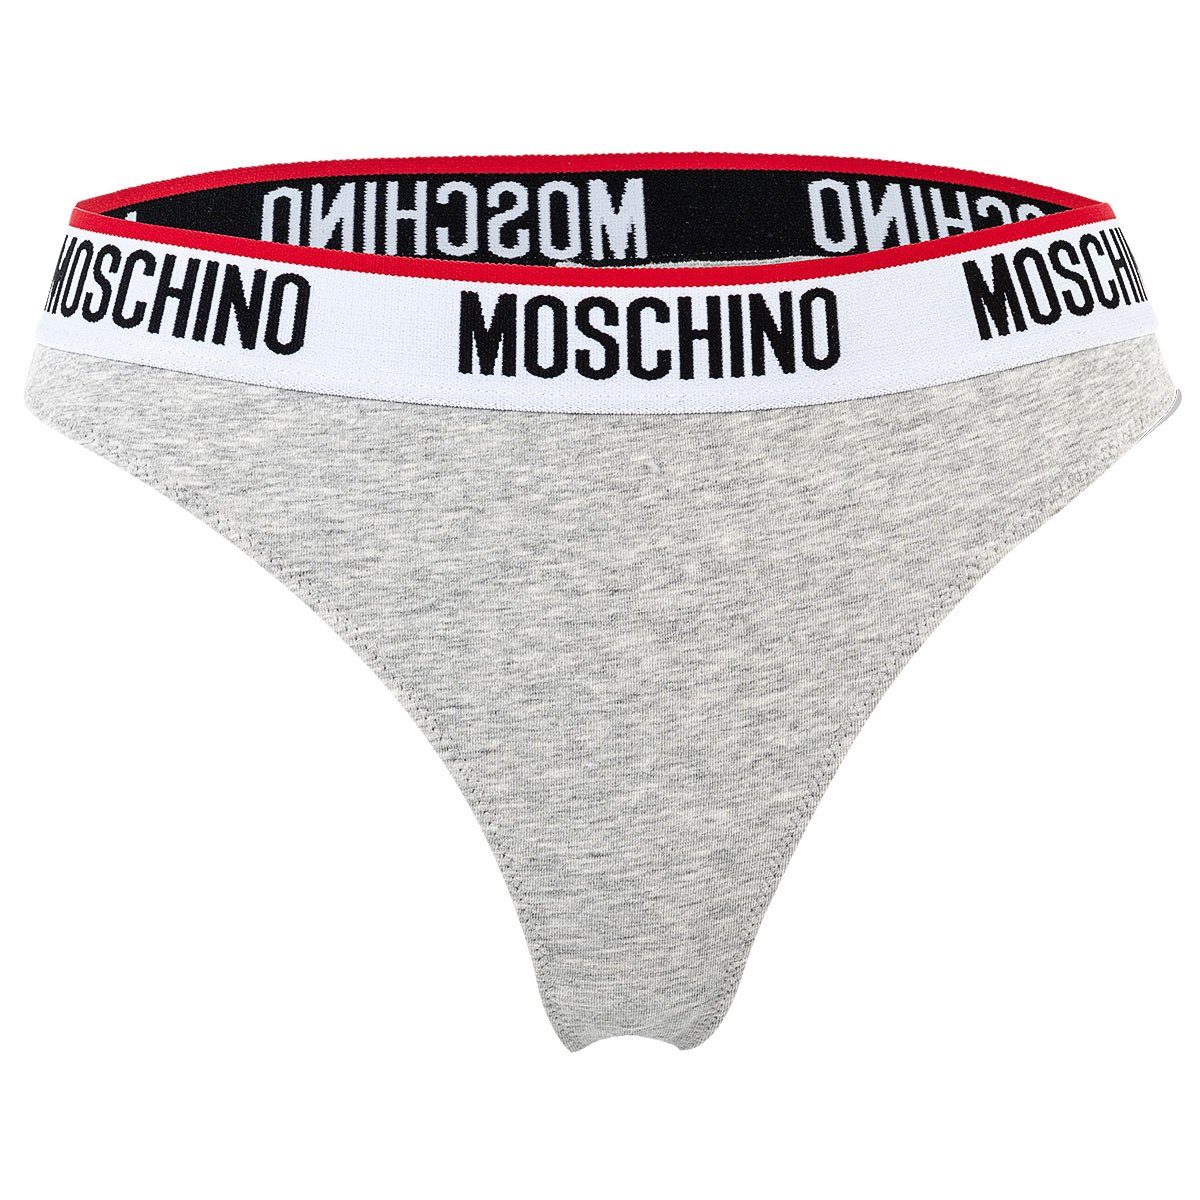 Moschino String Damen Unterhose, Grau - Strings 2er Pack Cotton Slips